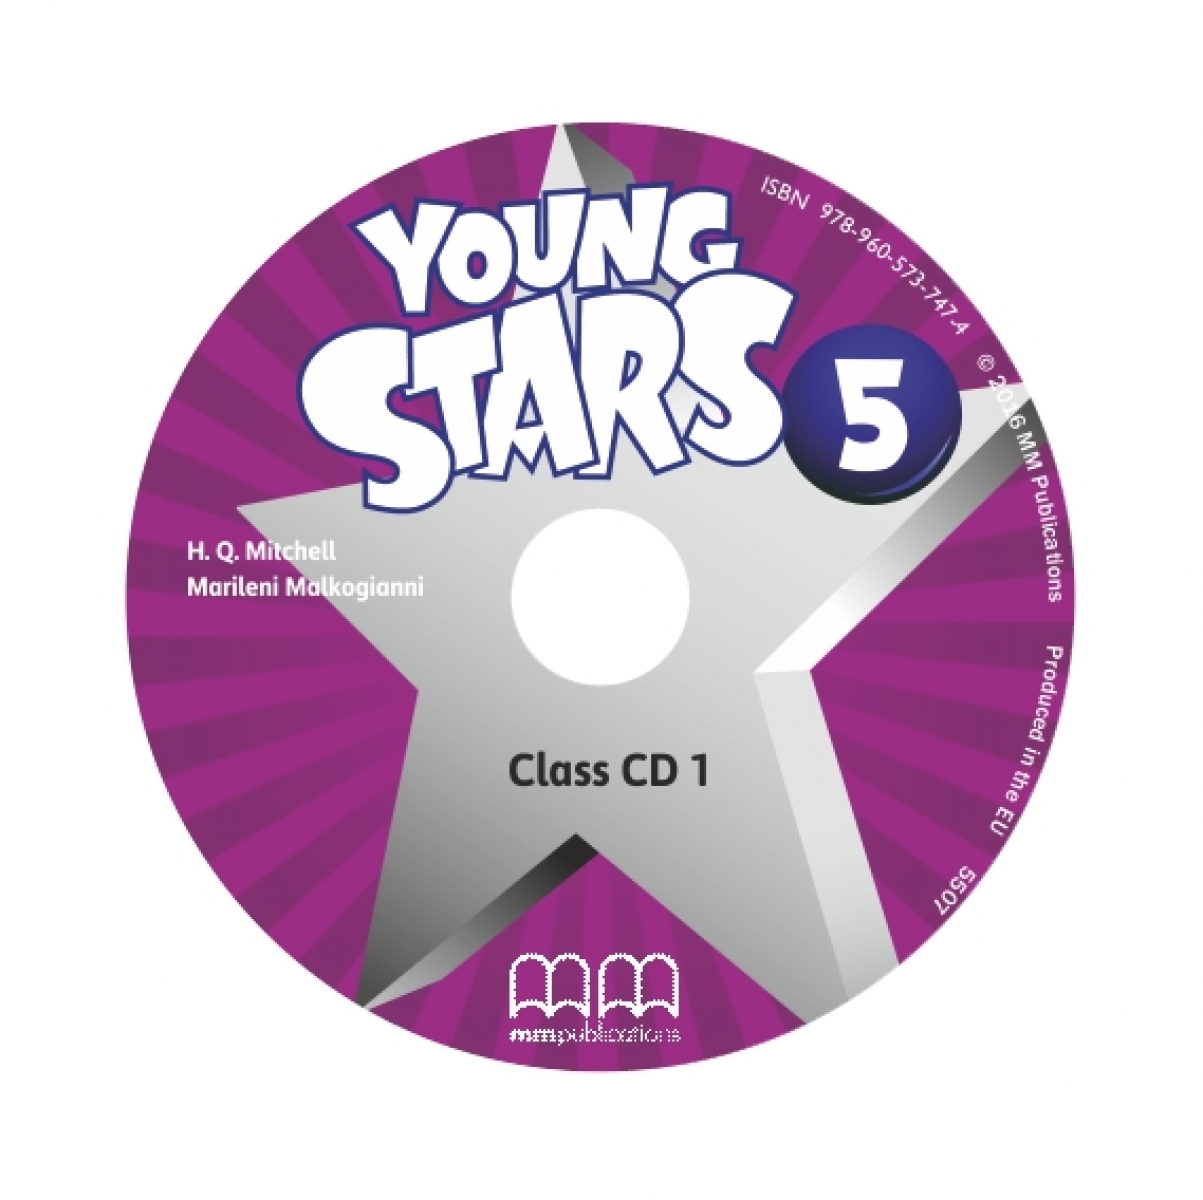 Marileni Malkogianni, H.Q.Mitchell Young Stars 5 Cl CD 